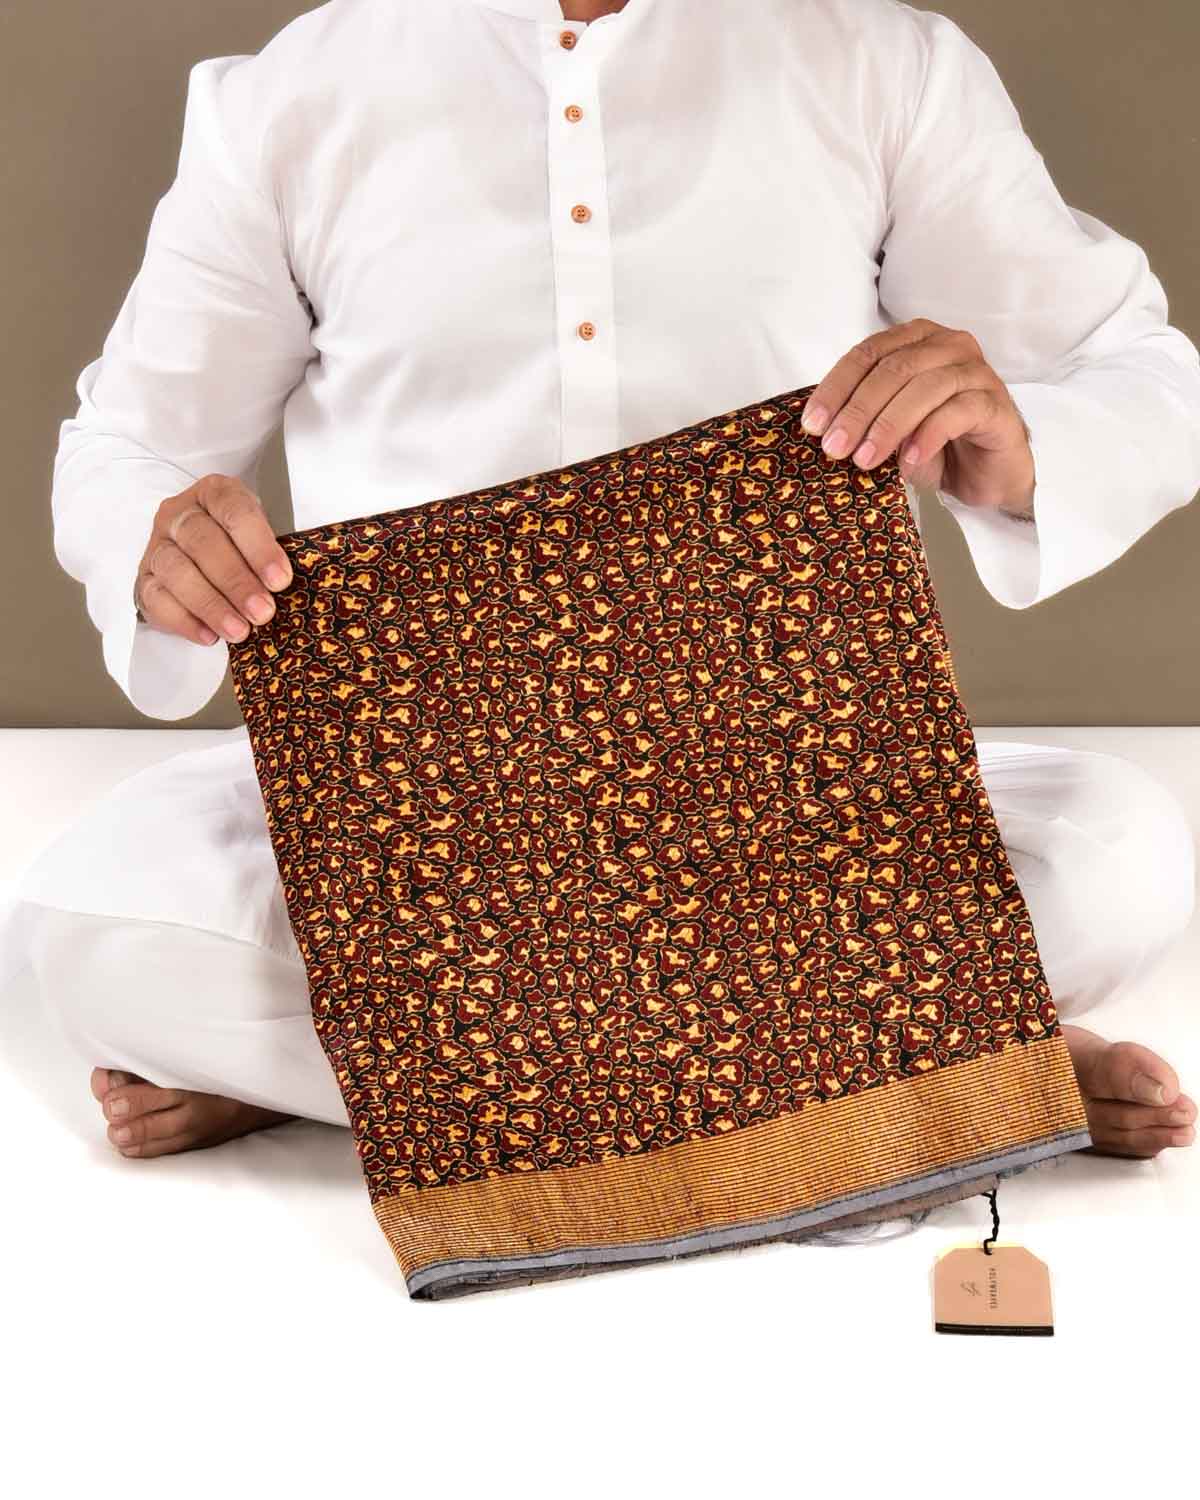 Black Banarasi Alfi Jaguar Resham Brocade Handwoven Katan Silk Saree - By HolyWeaves, Benares